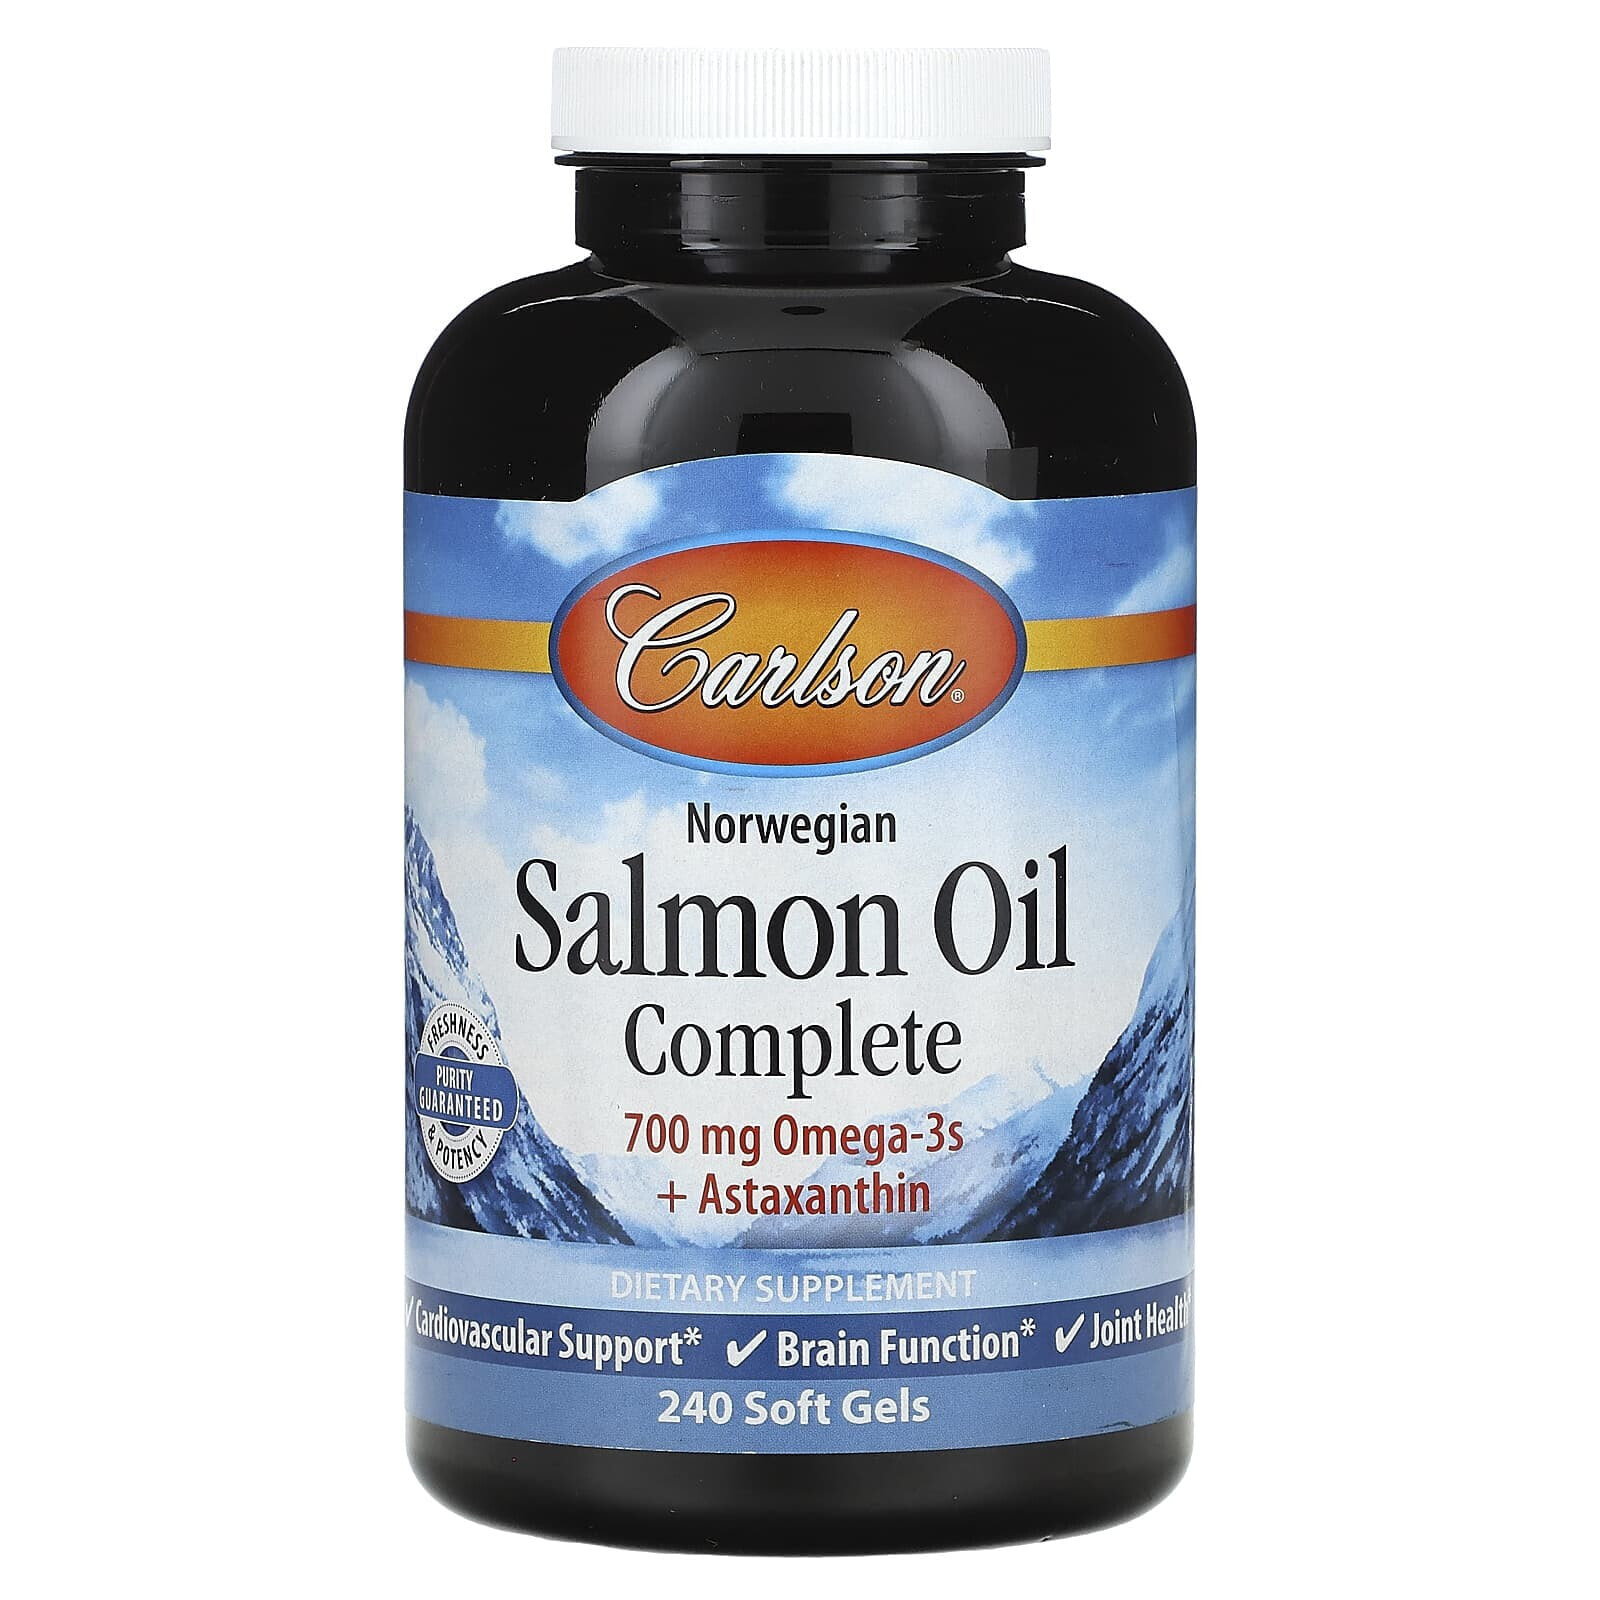 Norwegian Salmon Oil Complete, 240 Soft Gels